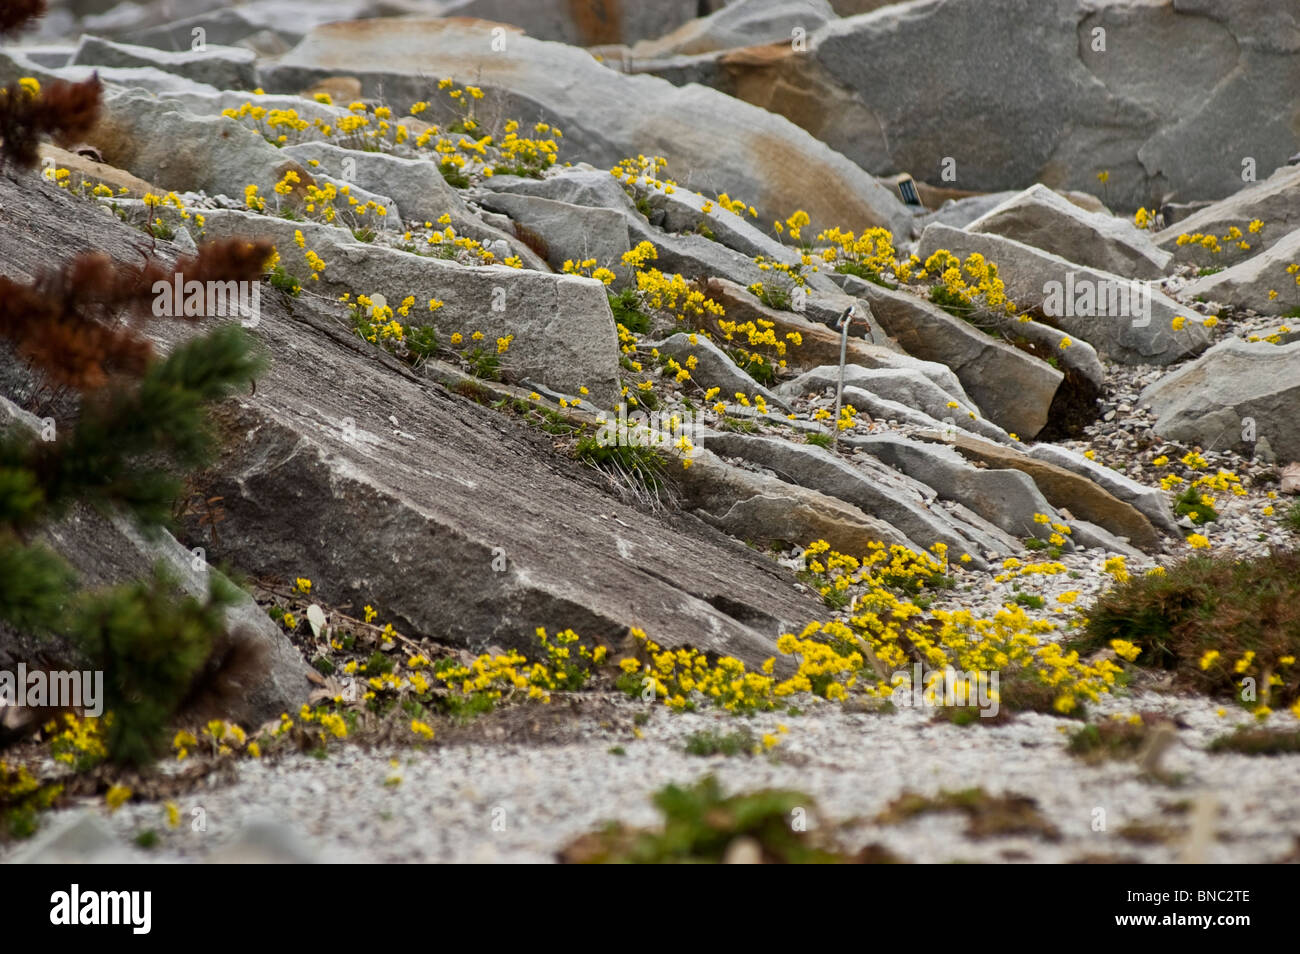 Yellow draba growing on rocky vertical crevice garden Stock Photo